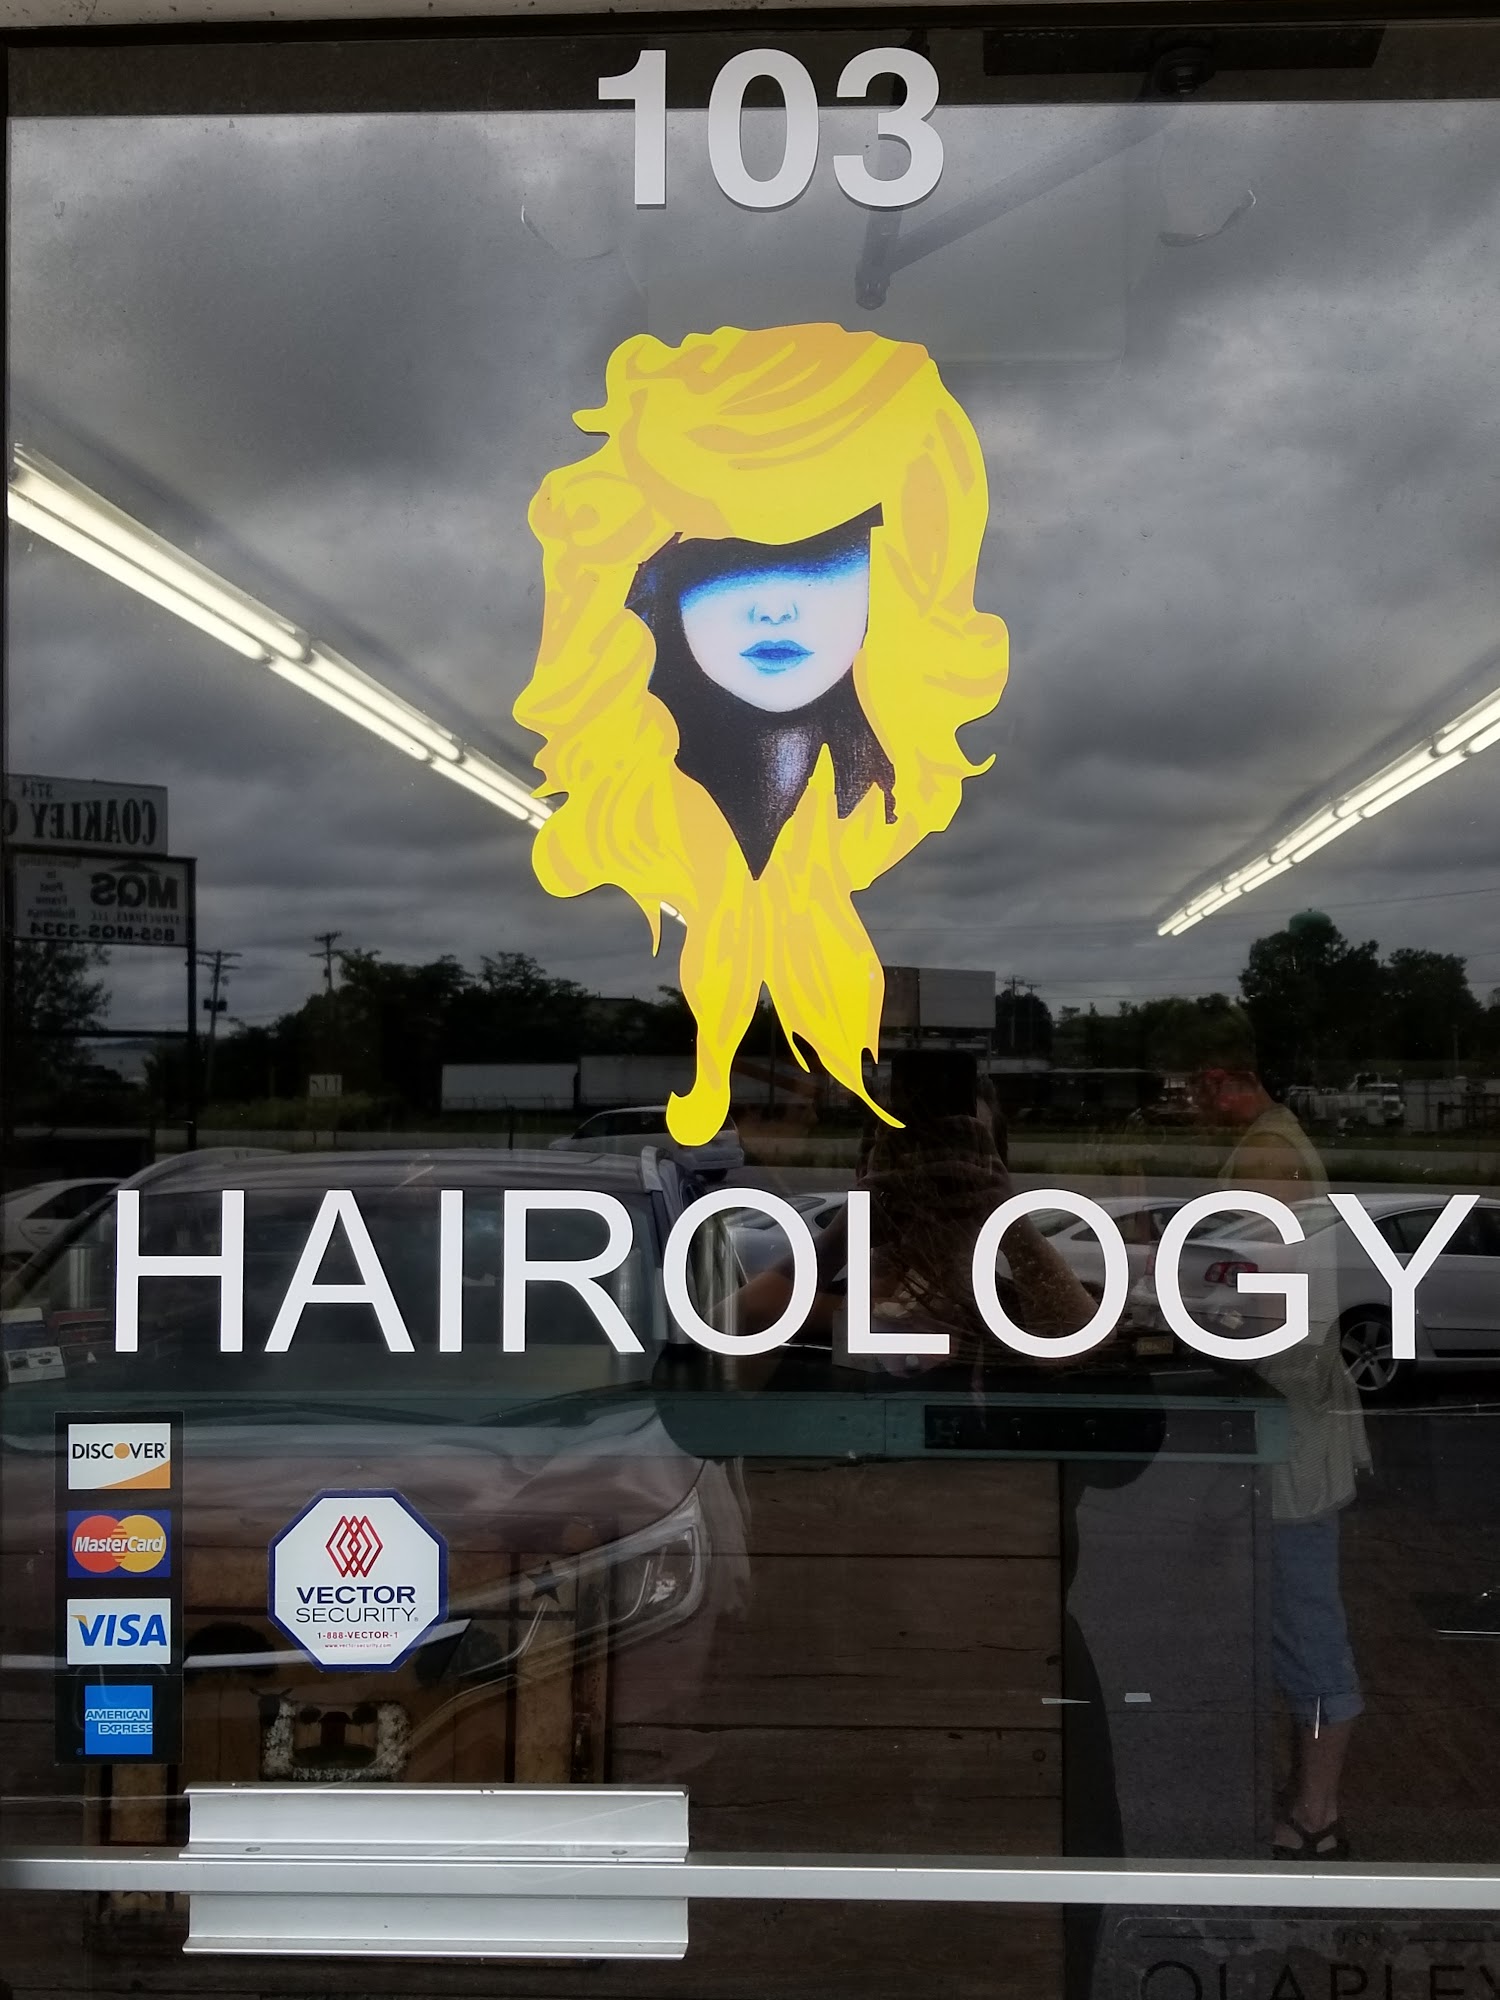 Hairology